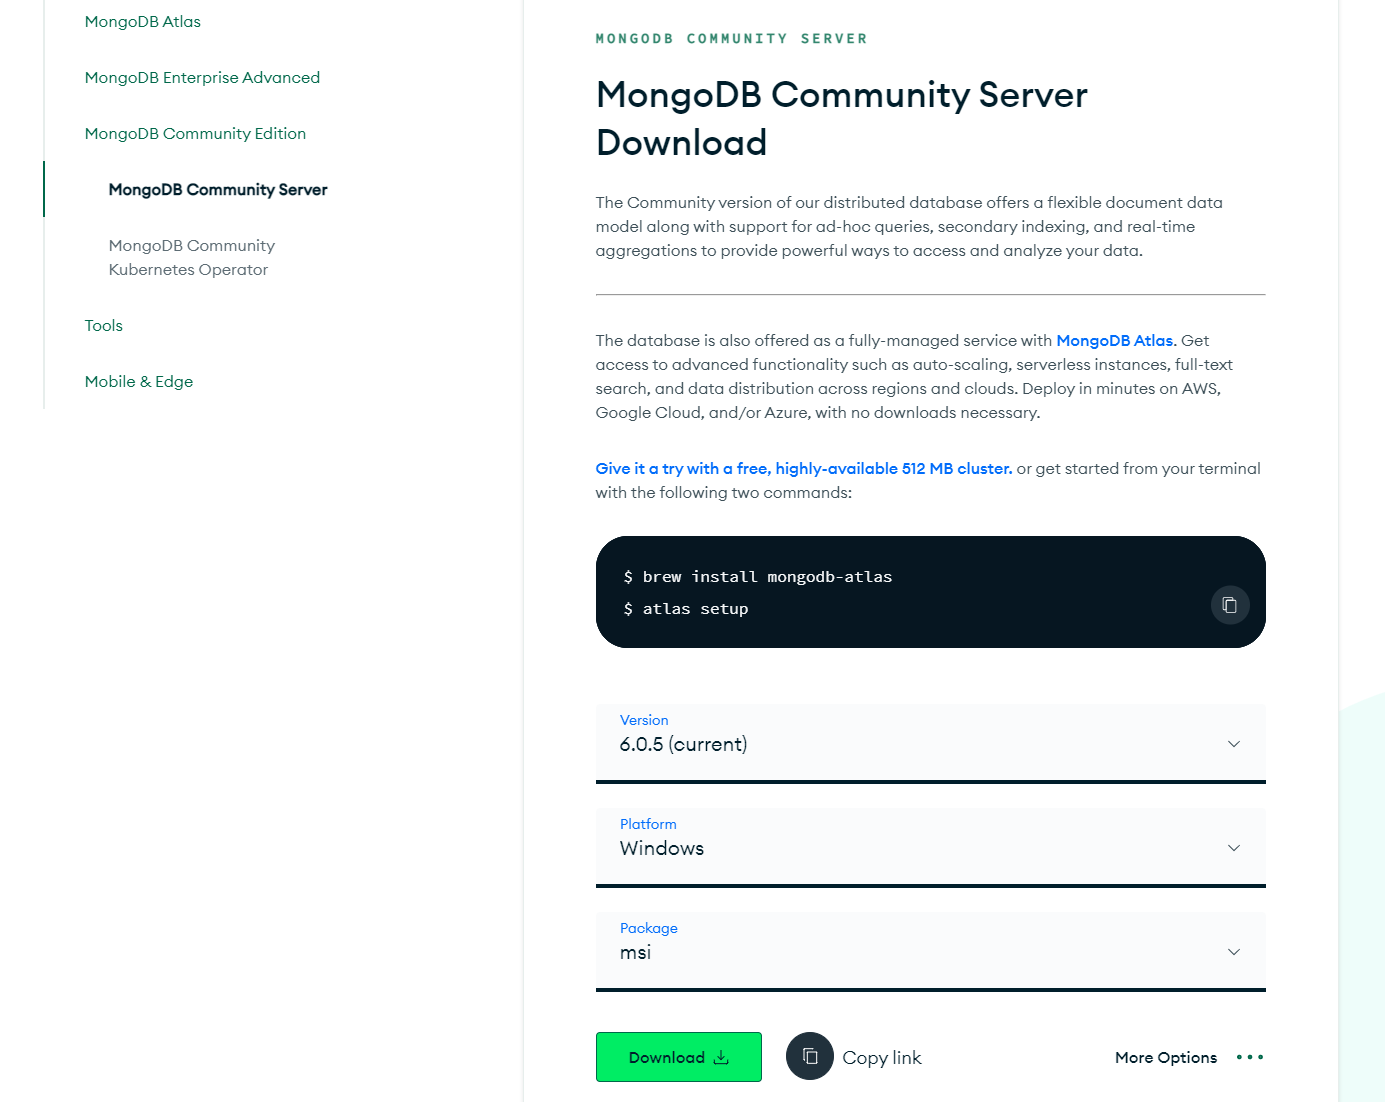 MongoDB Community Server Download